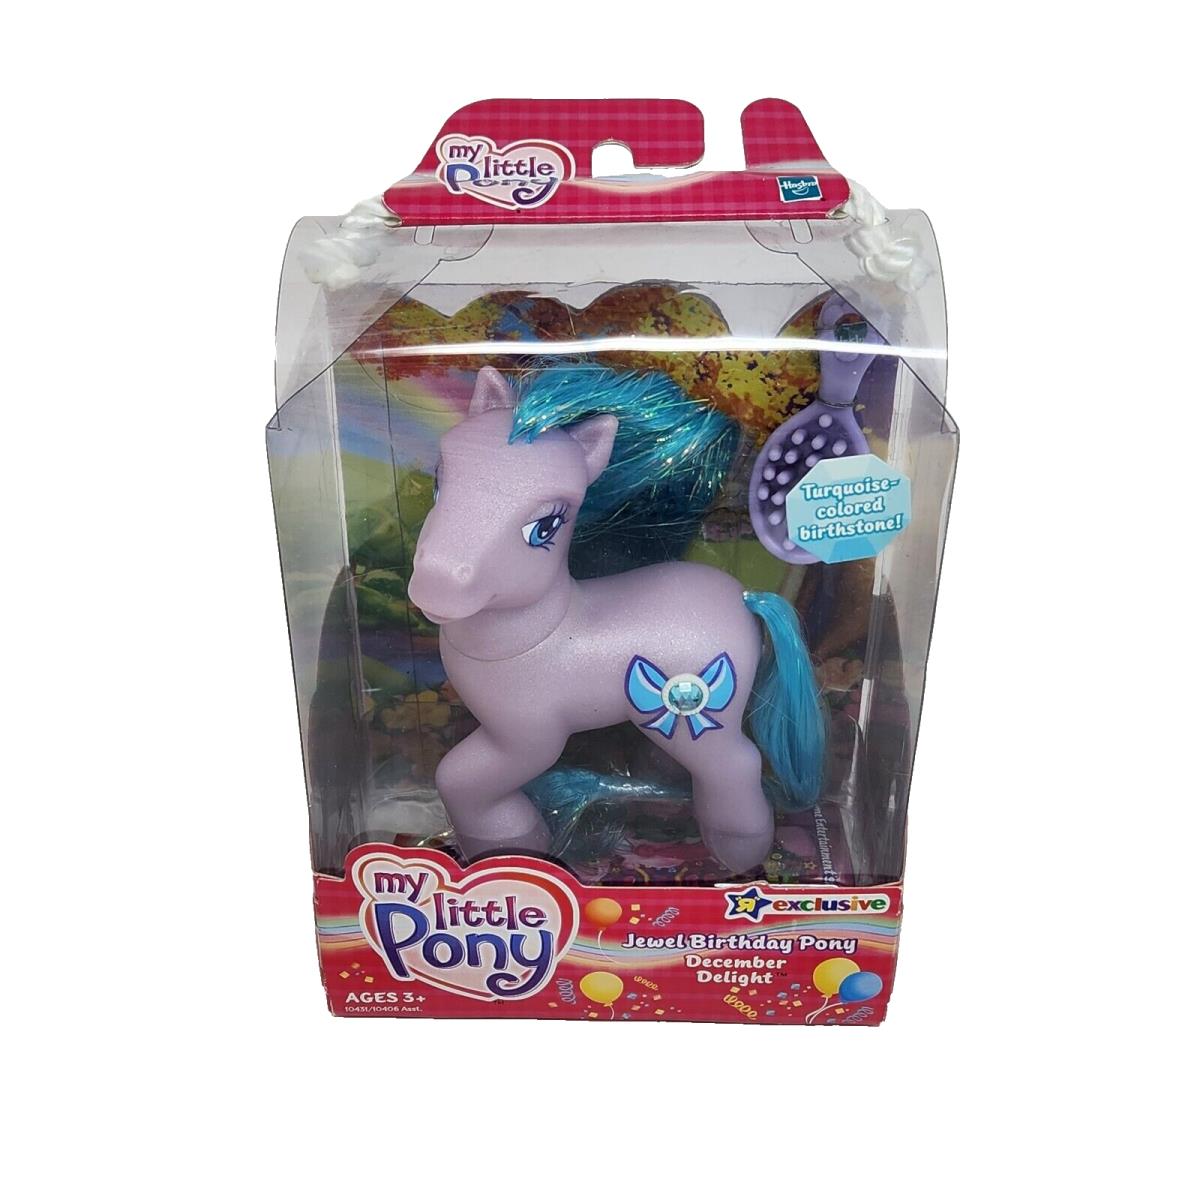 Hasbro MY Little Pony Jewel Birthday Pony December Delight Toys R US G3